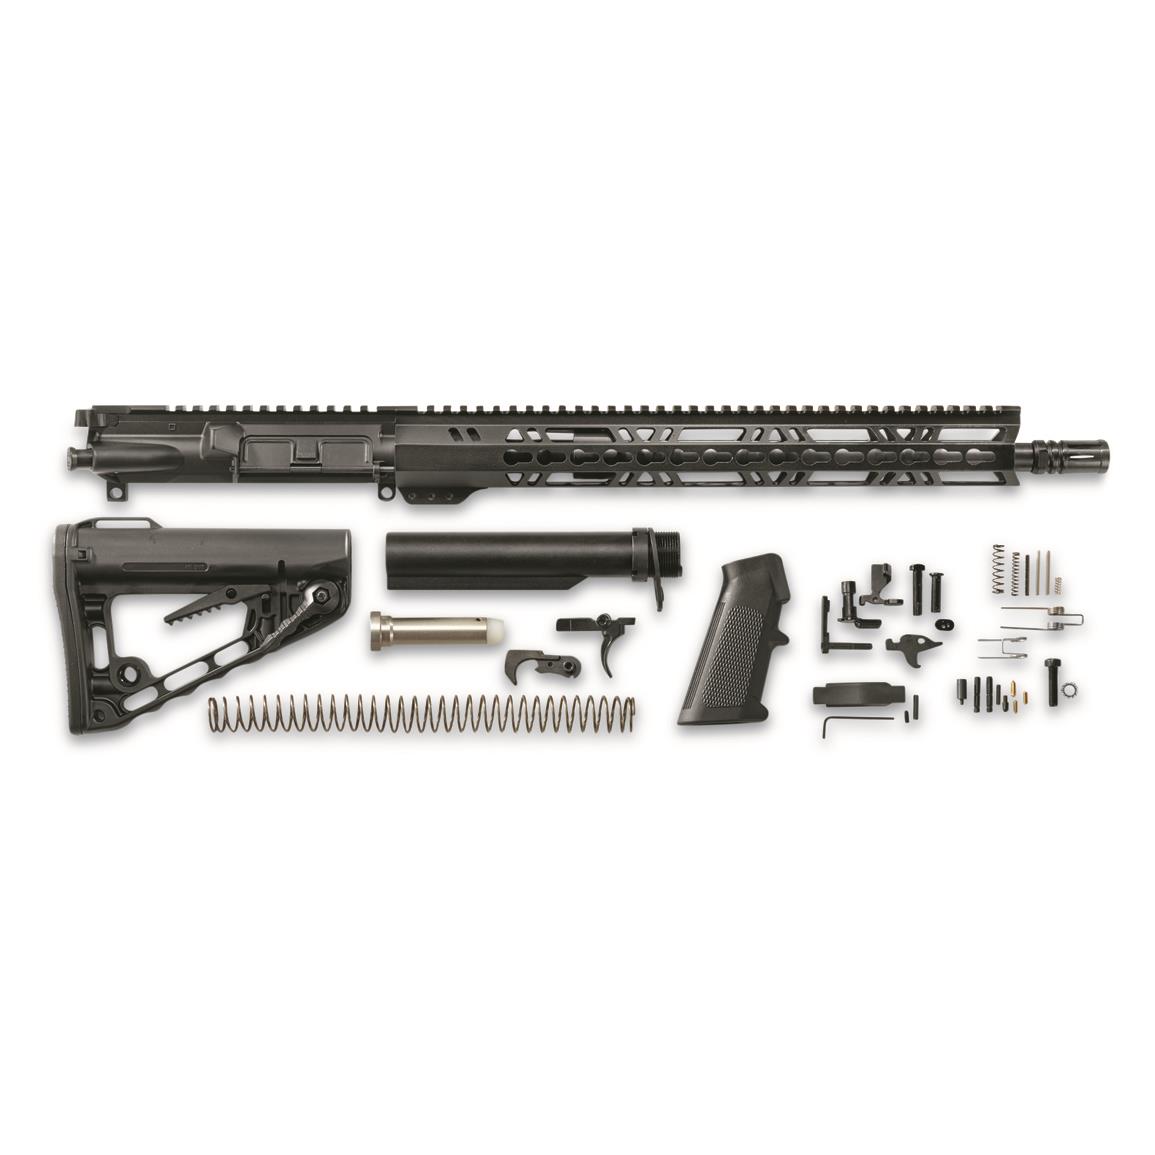 CBC AR-15 Rifle Kit, Semi-Automatic, 300 BLK, 16" Barrel, No Stripped Lower or Magazine